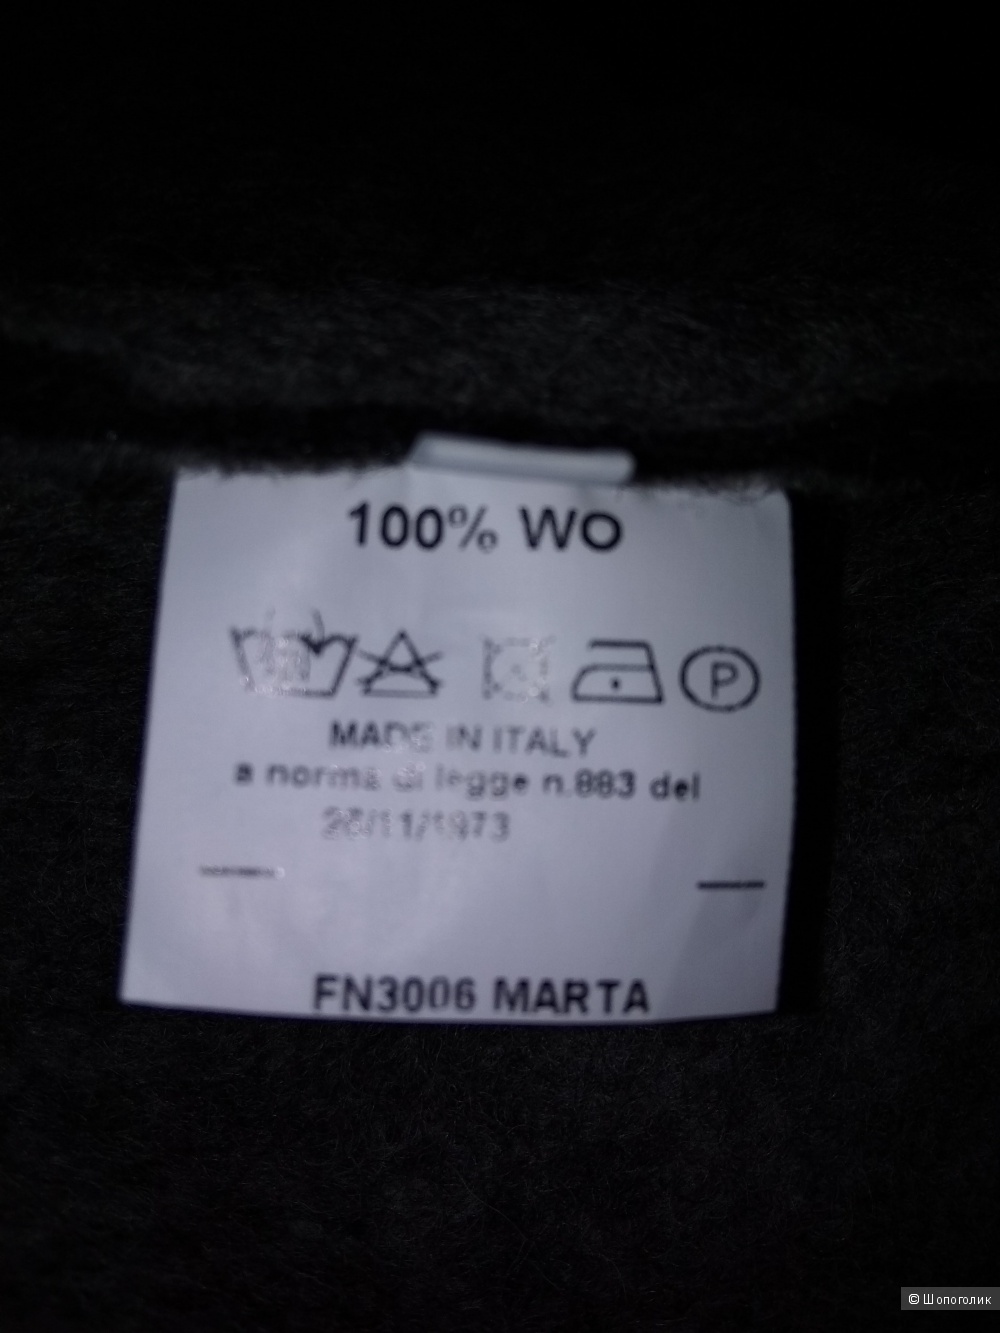 Пальто FONTANA 2.0, 44 размер